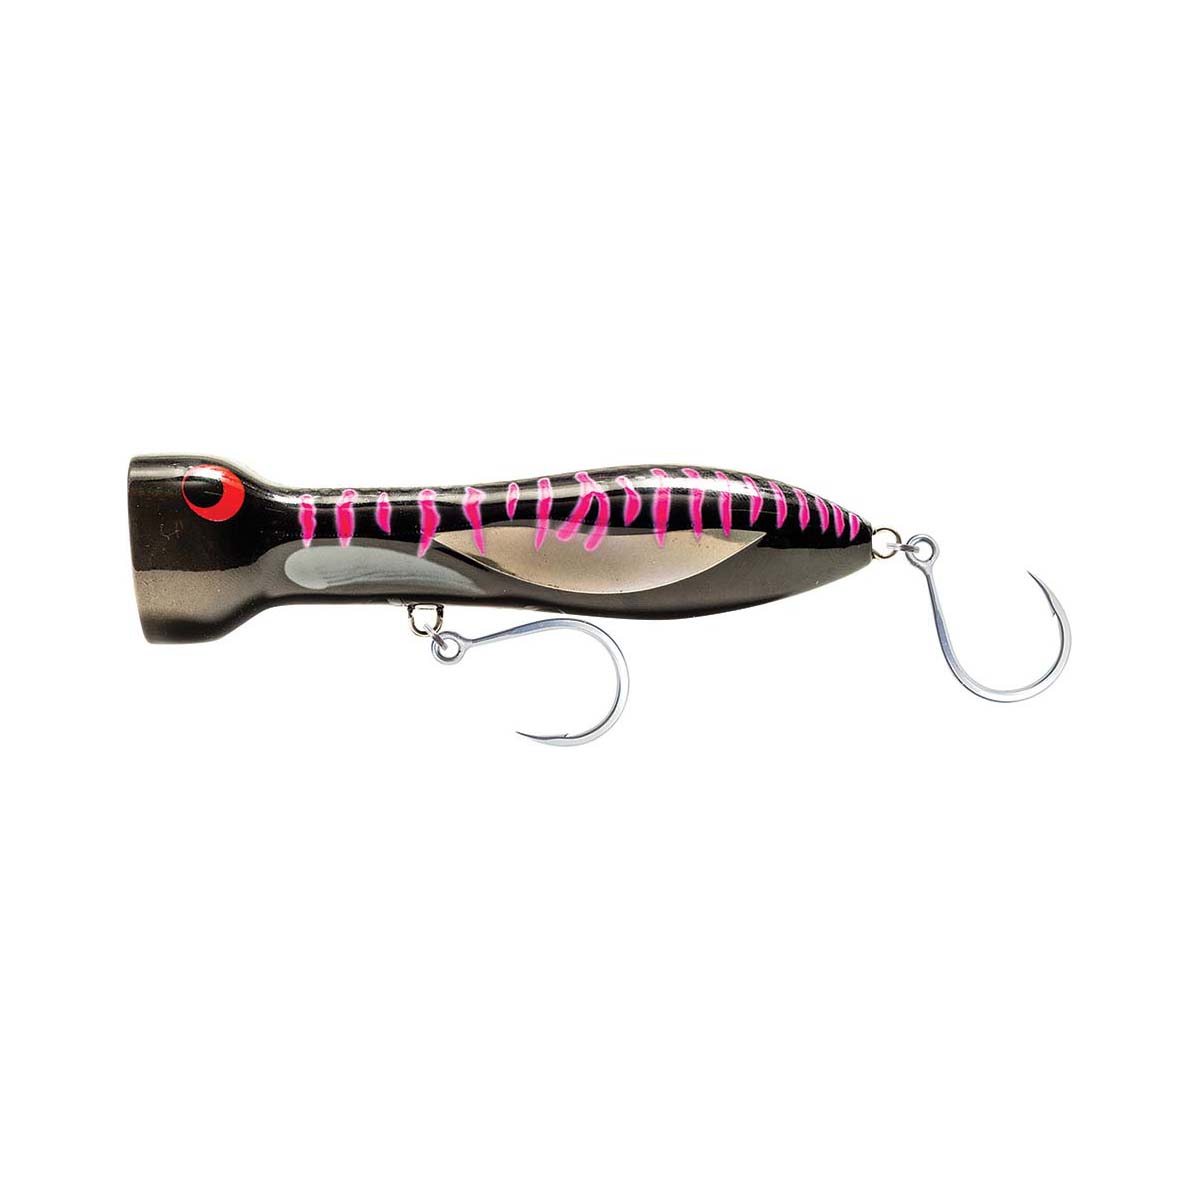 Nomad Chug Norris Surface Popper Lure 15cm Black Pink Mackerel